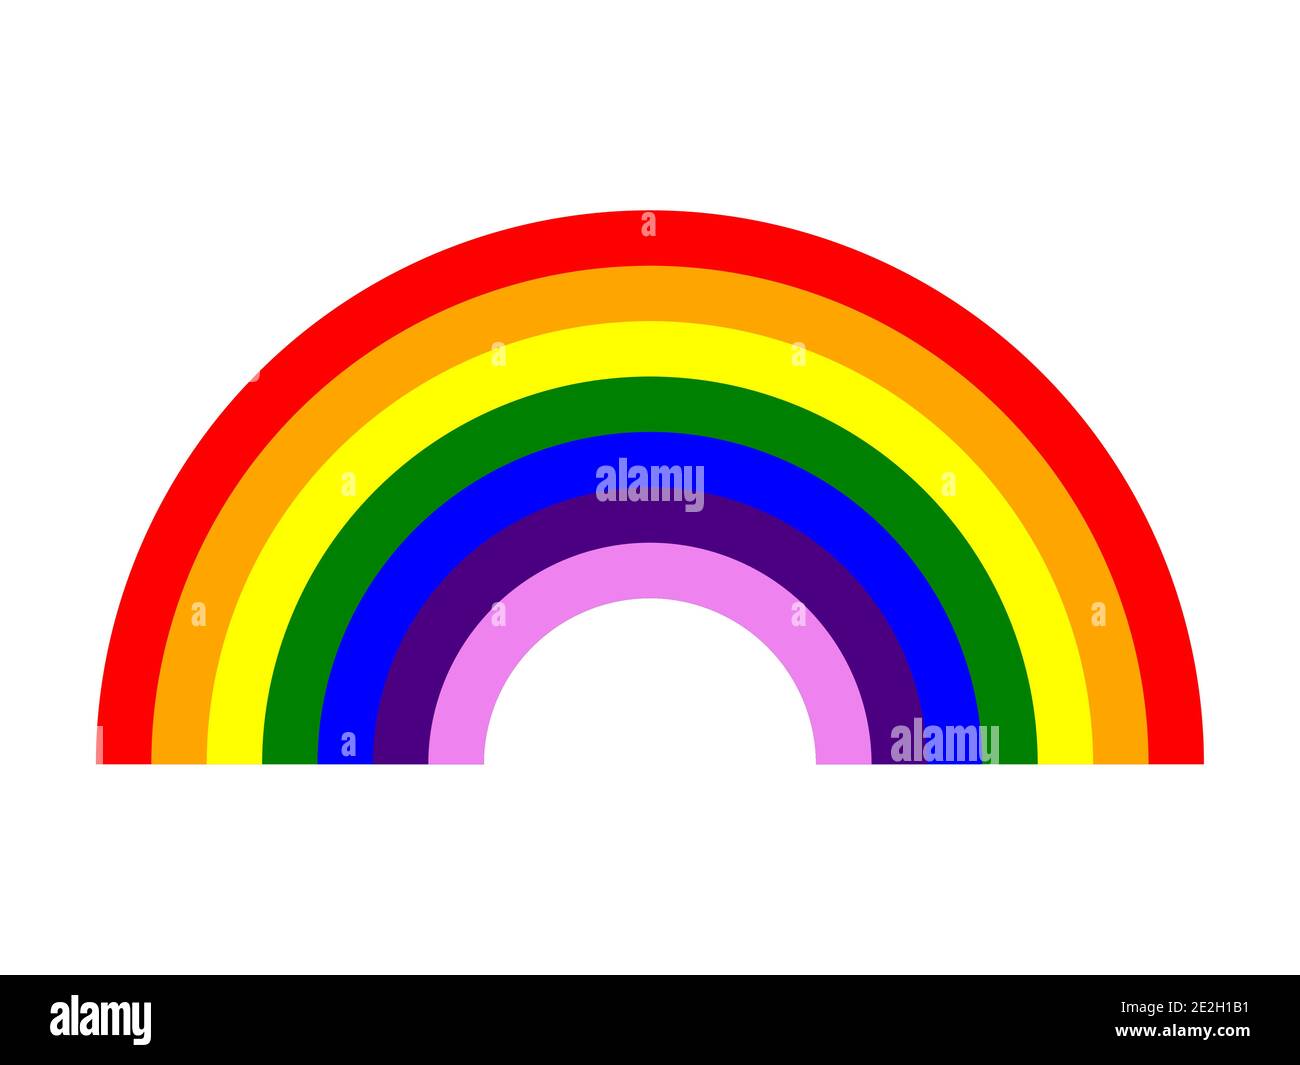 Rainbow with Seven Colors (Red, Orange, Yellow, Green, Blue, Indigo, Violet) Icon. Vector Image. Stock Vector